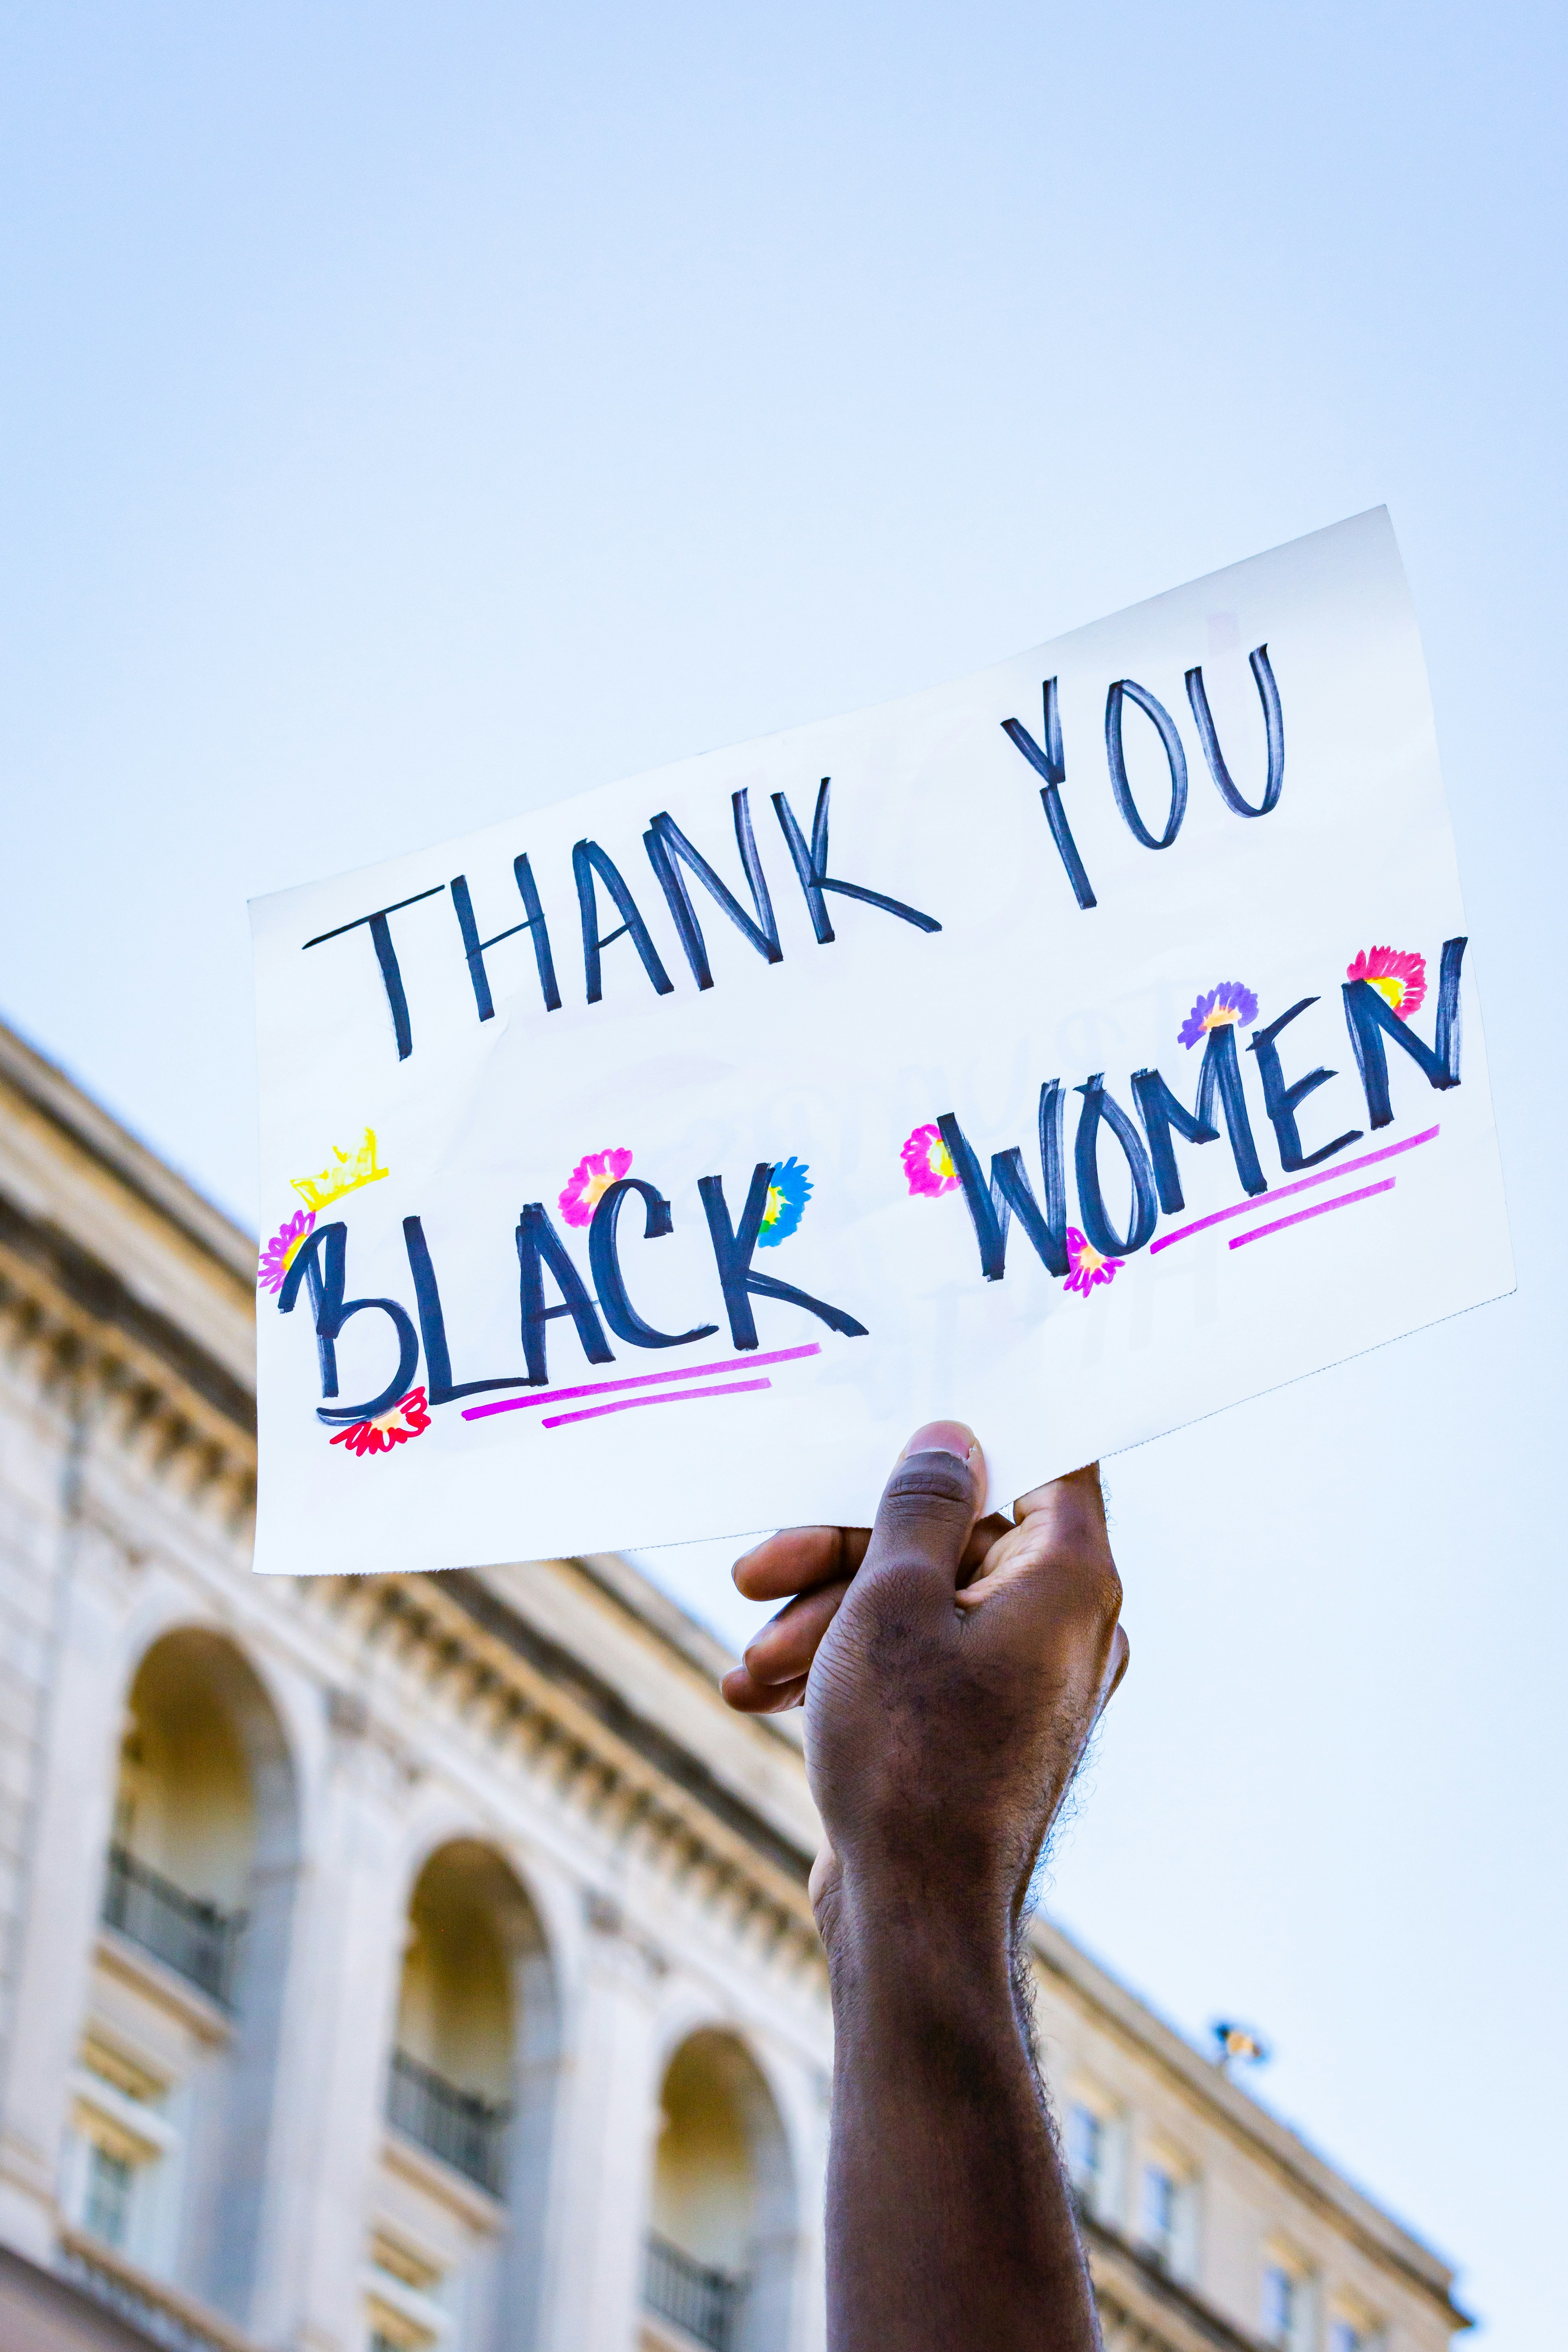 Black Women’s History Month